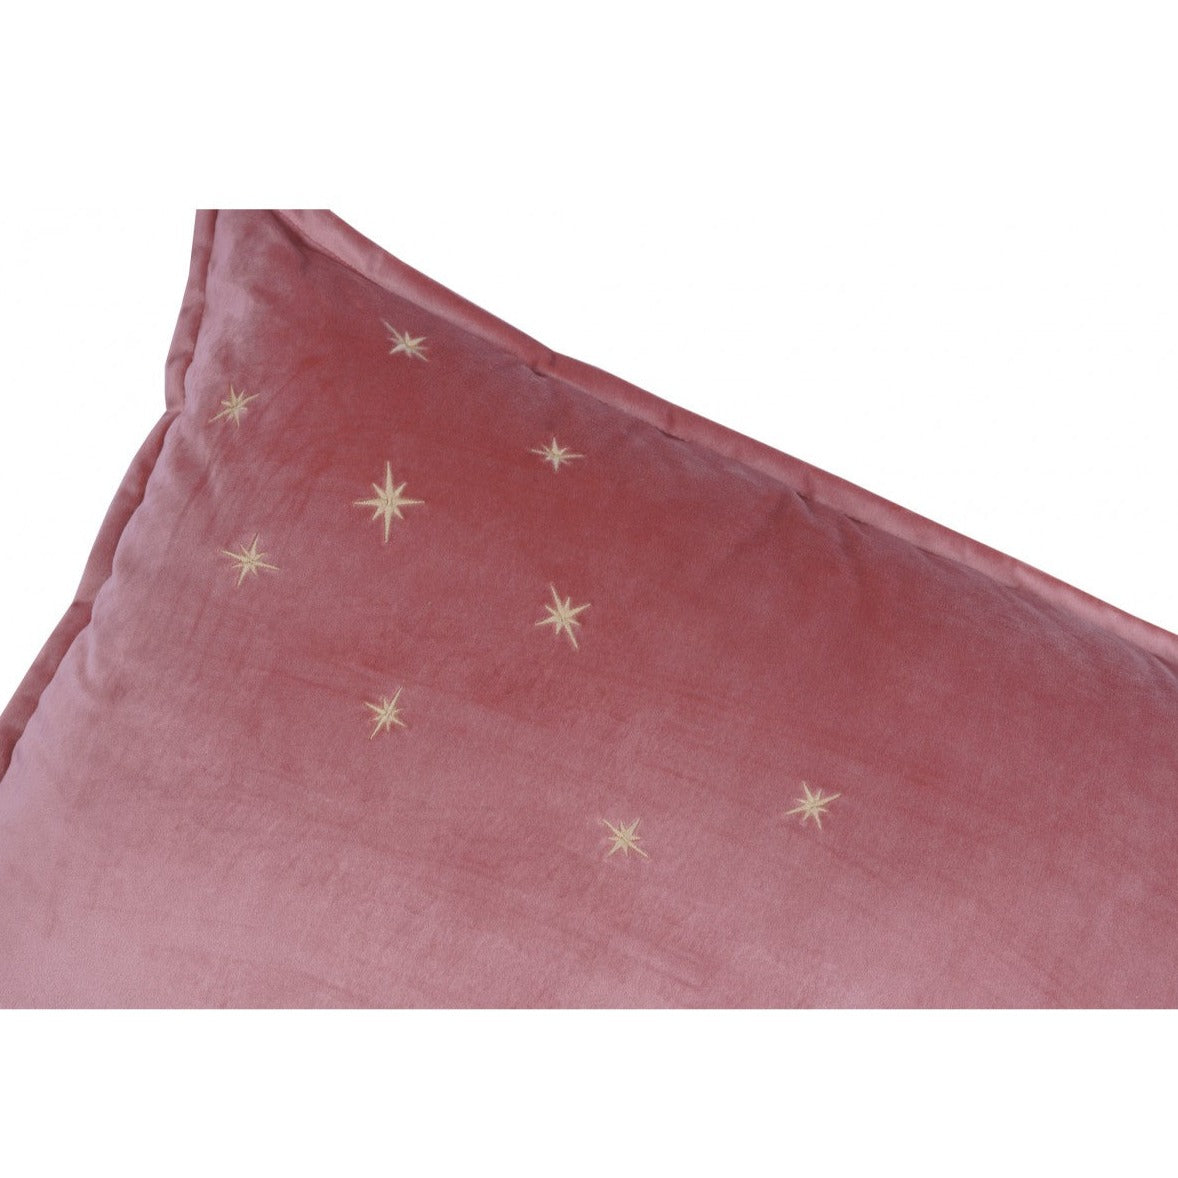 Personalised Luxury Velvet Cushion - Rose Pink